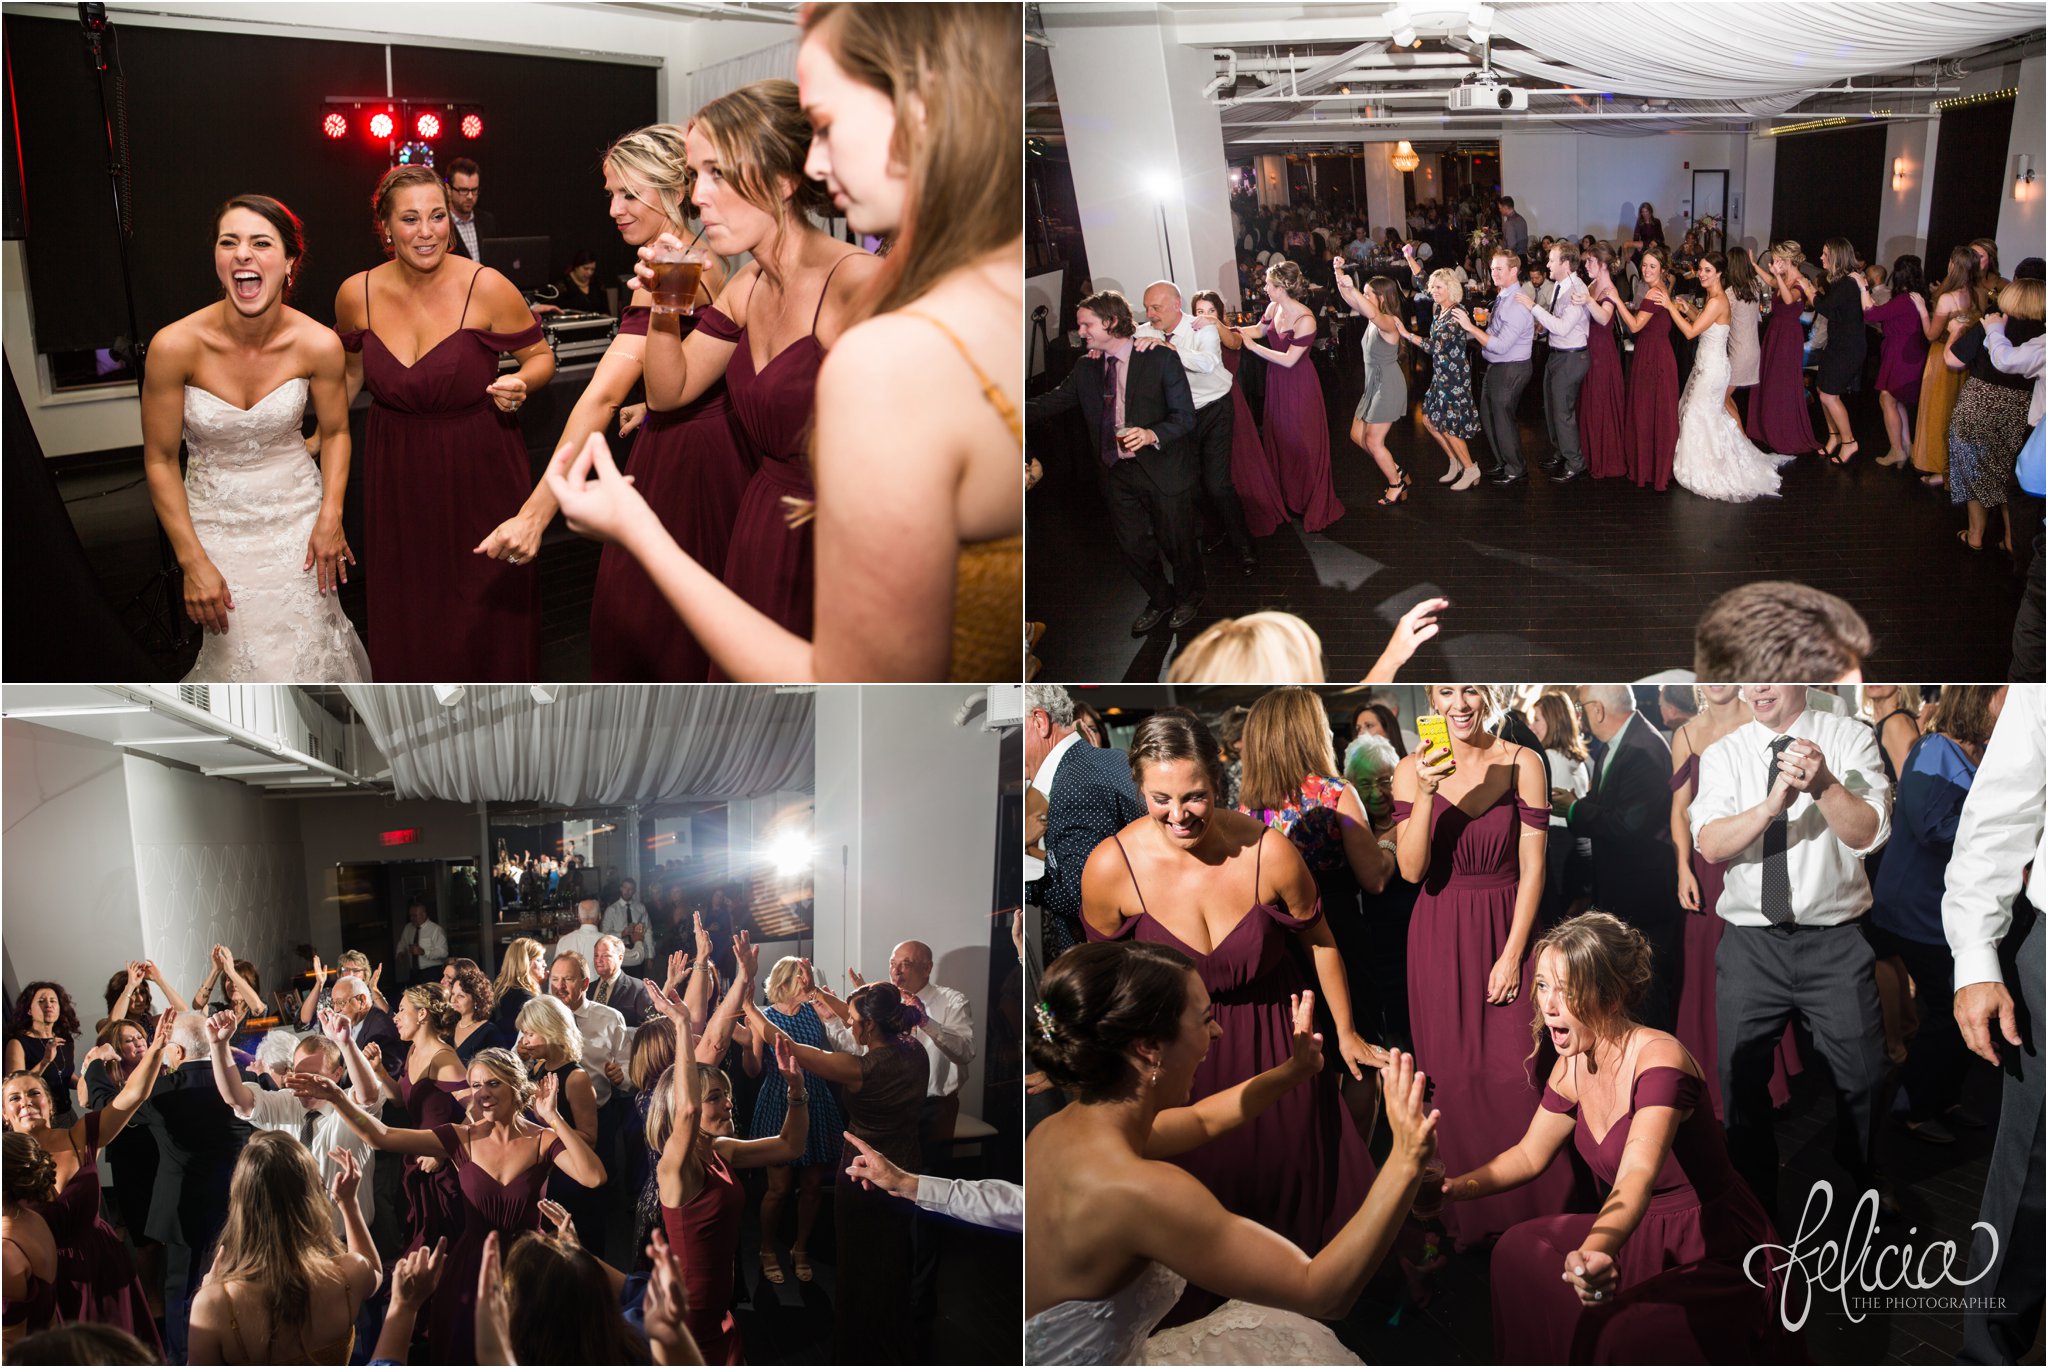 images by feliciathephotographer.com | wedding photographer | kansas city | reception | dance floor | party | bridesmaids | laughter | conga line | get low | plaza venue | 